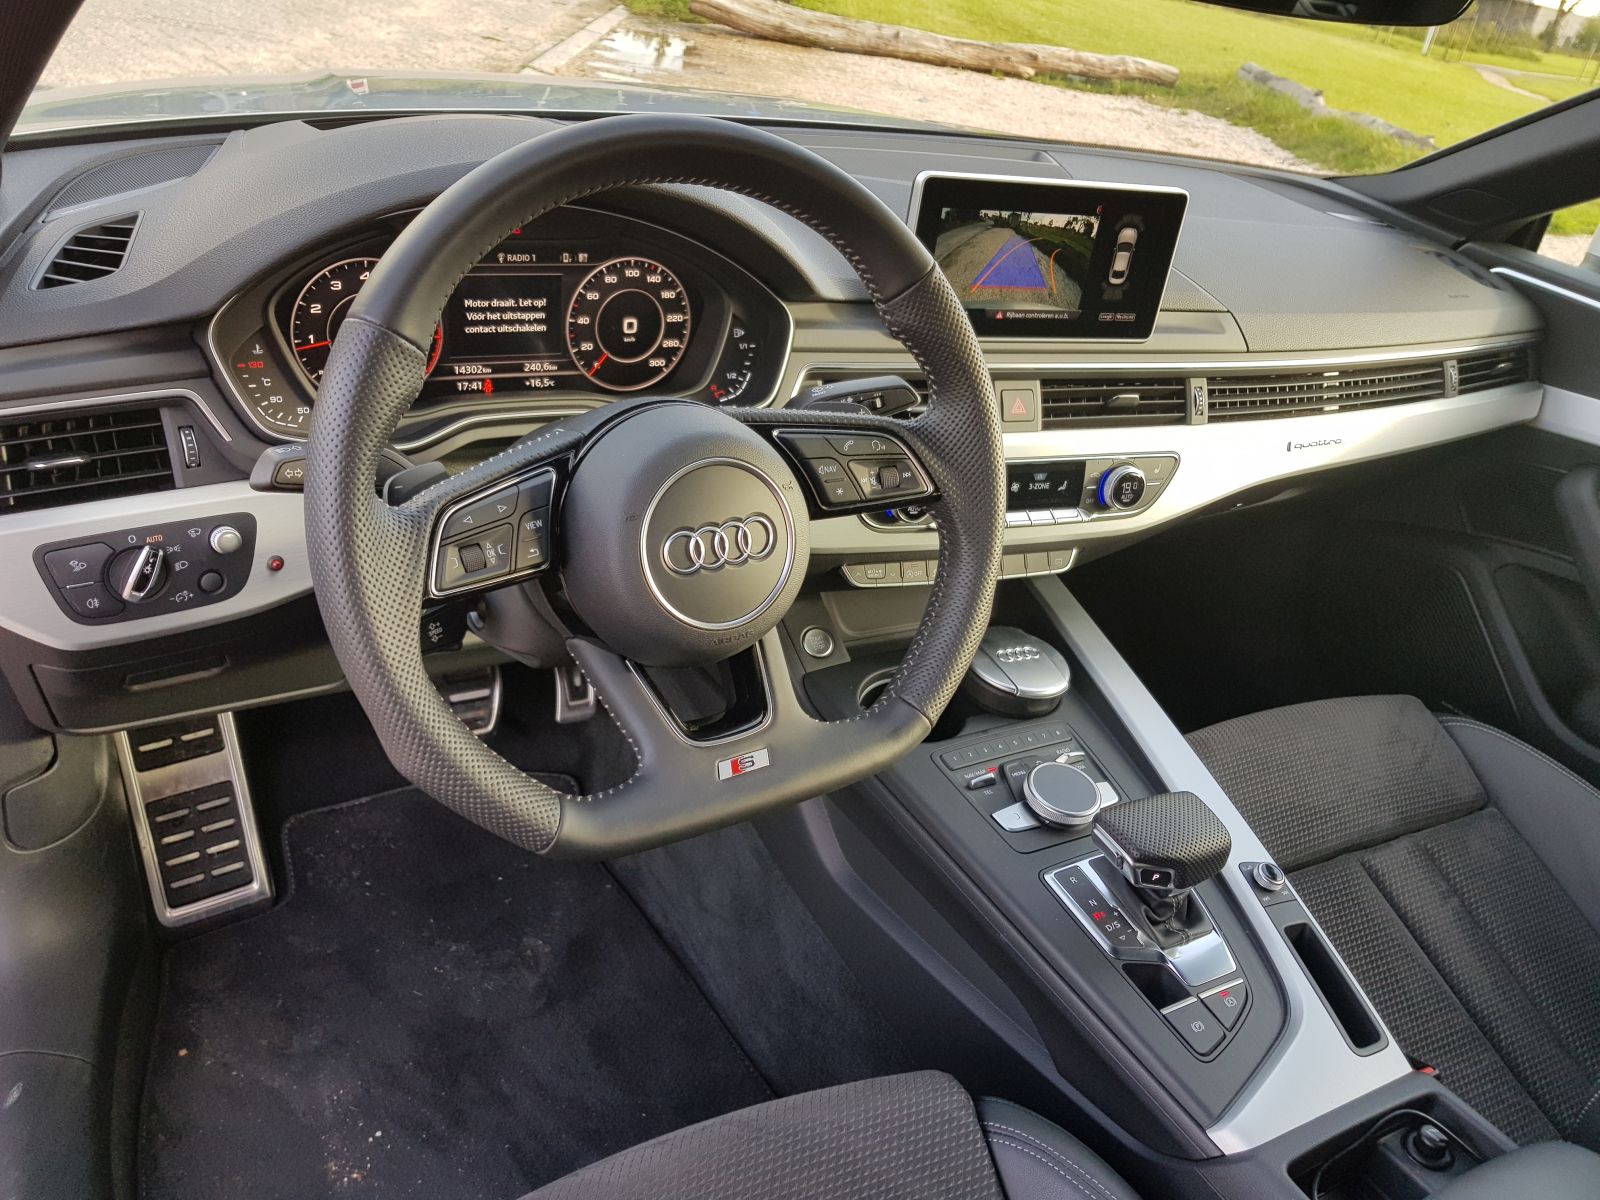 Audi A5 Coupe dashboard